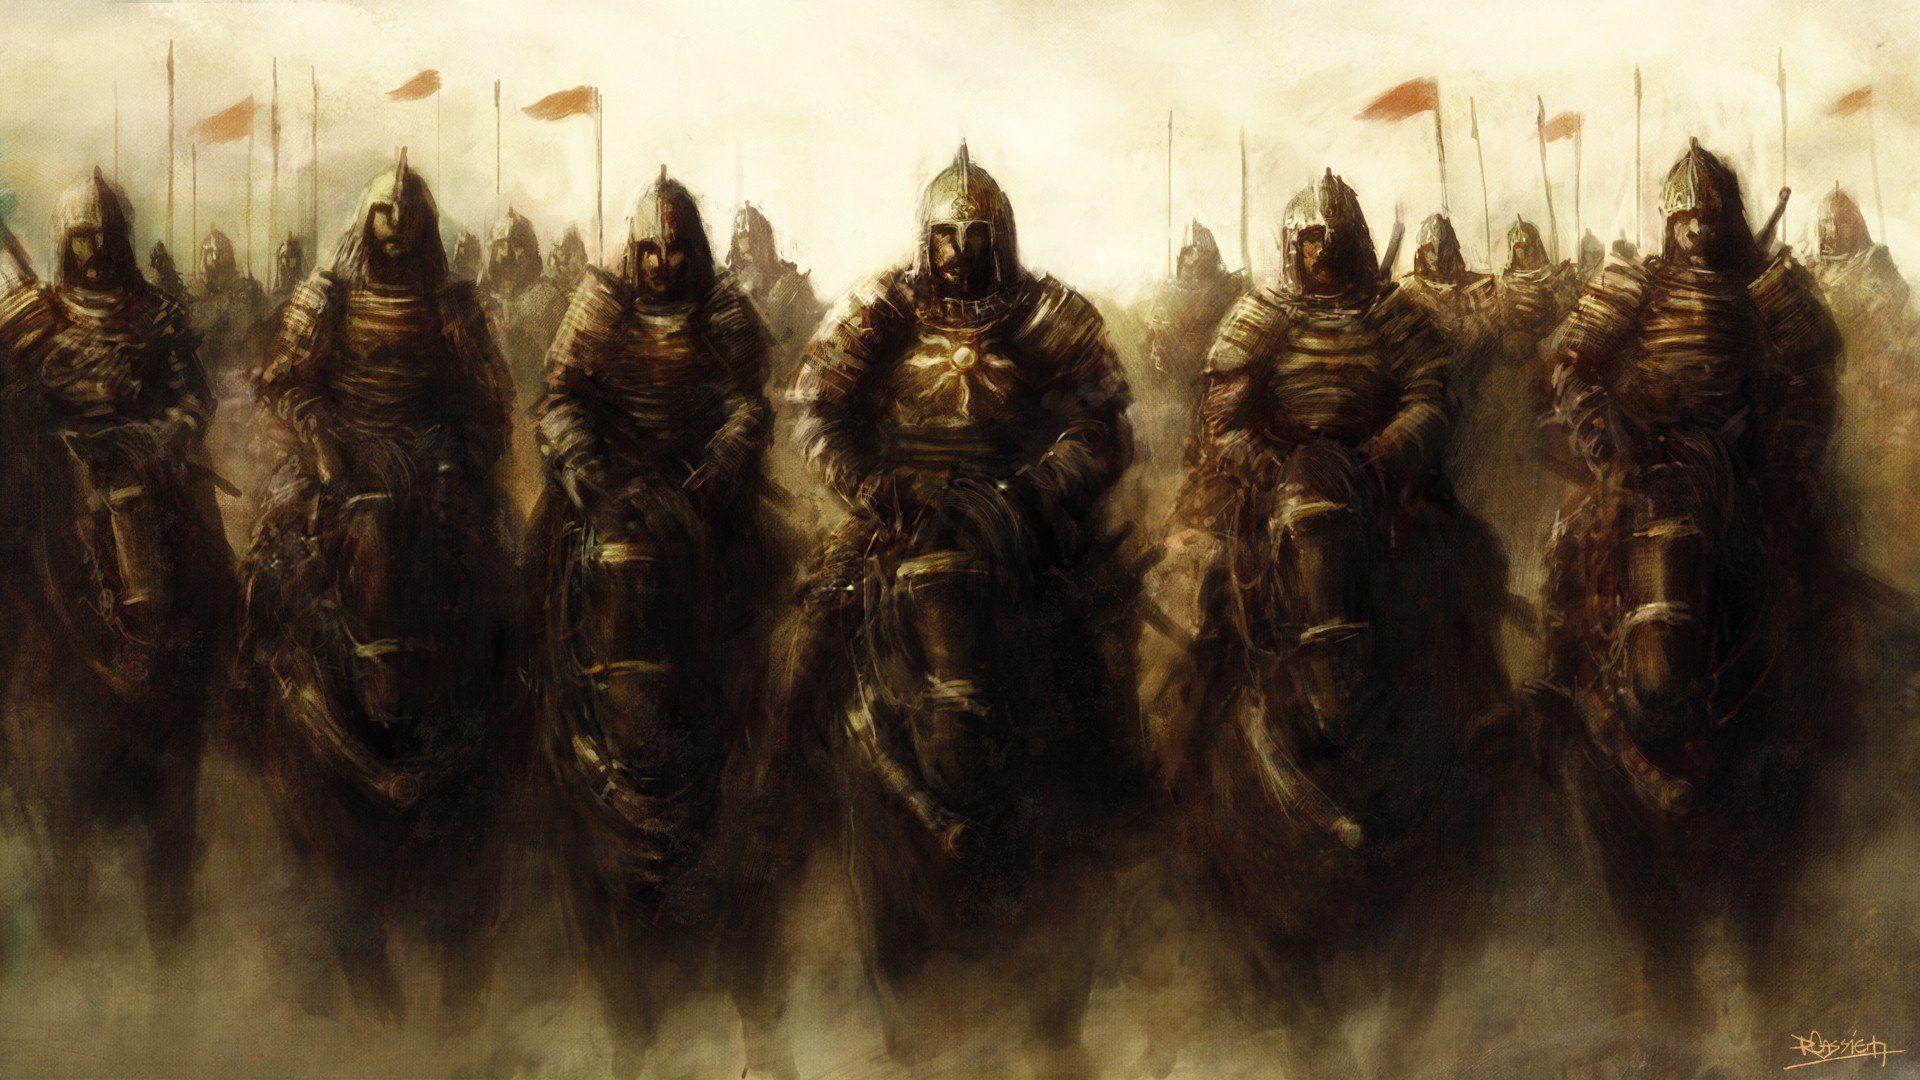 HD wallpaper: The elder scrolls online, Sword of the night, Warrior,  Assassin | Wallpaper Flare